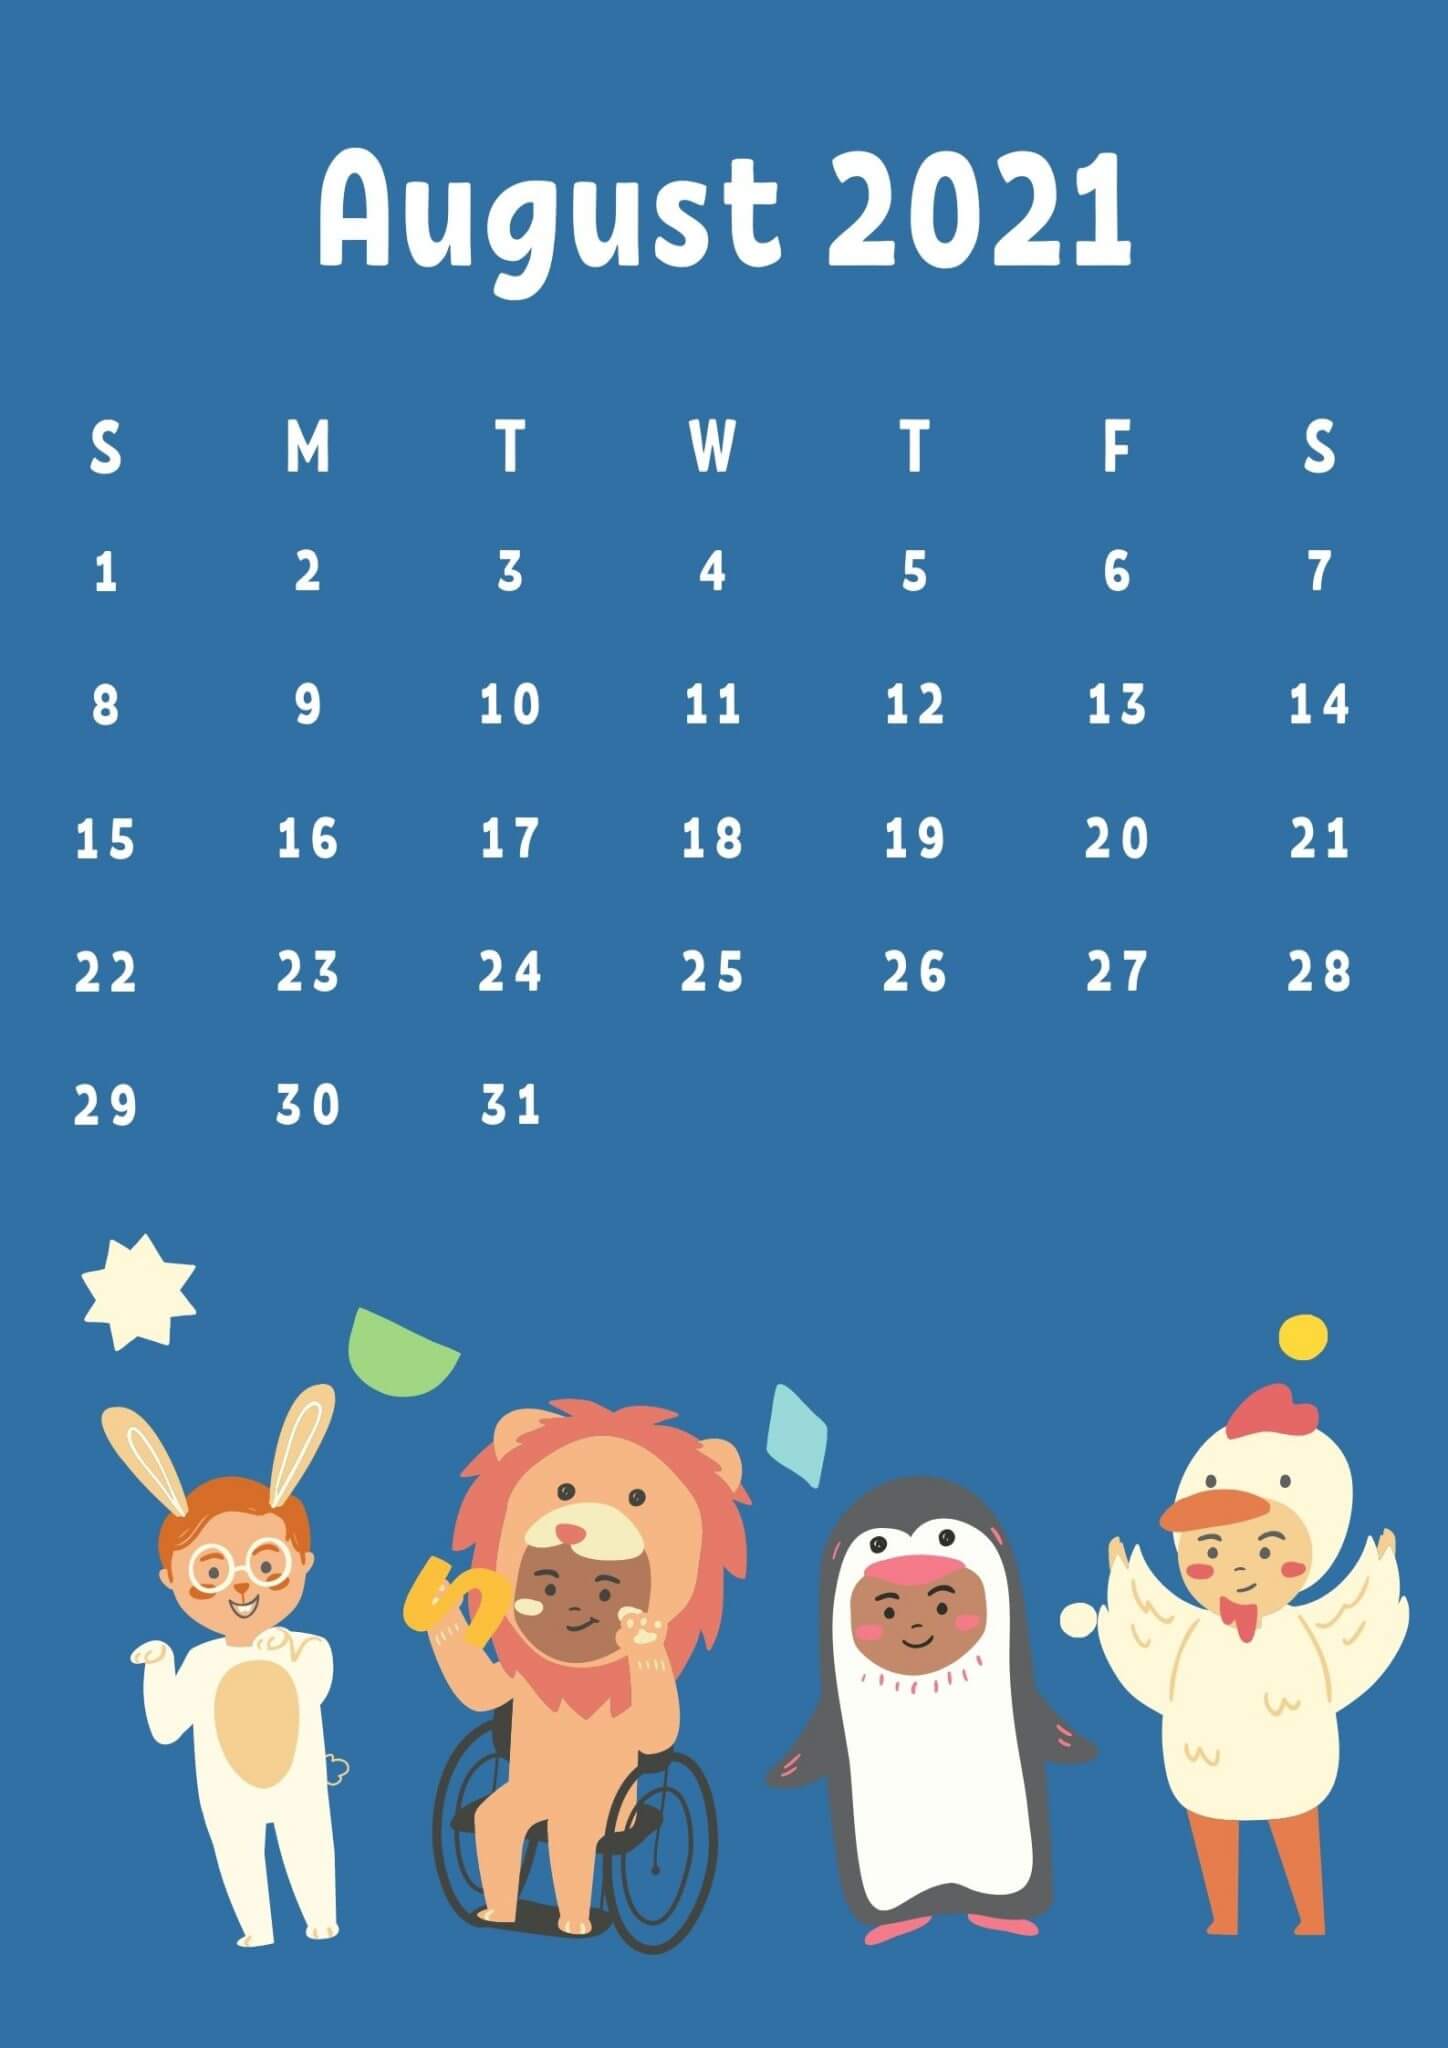 Cute August 2021 Calendar for Kids